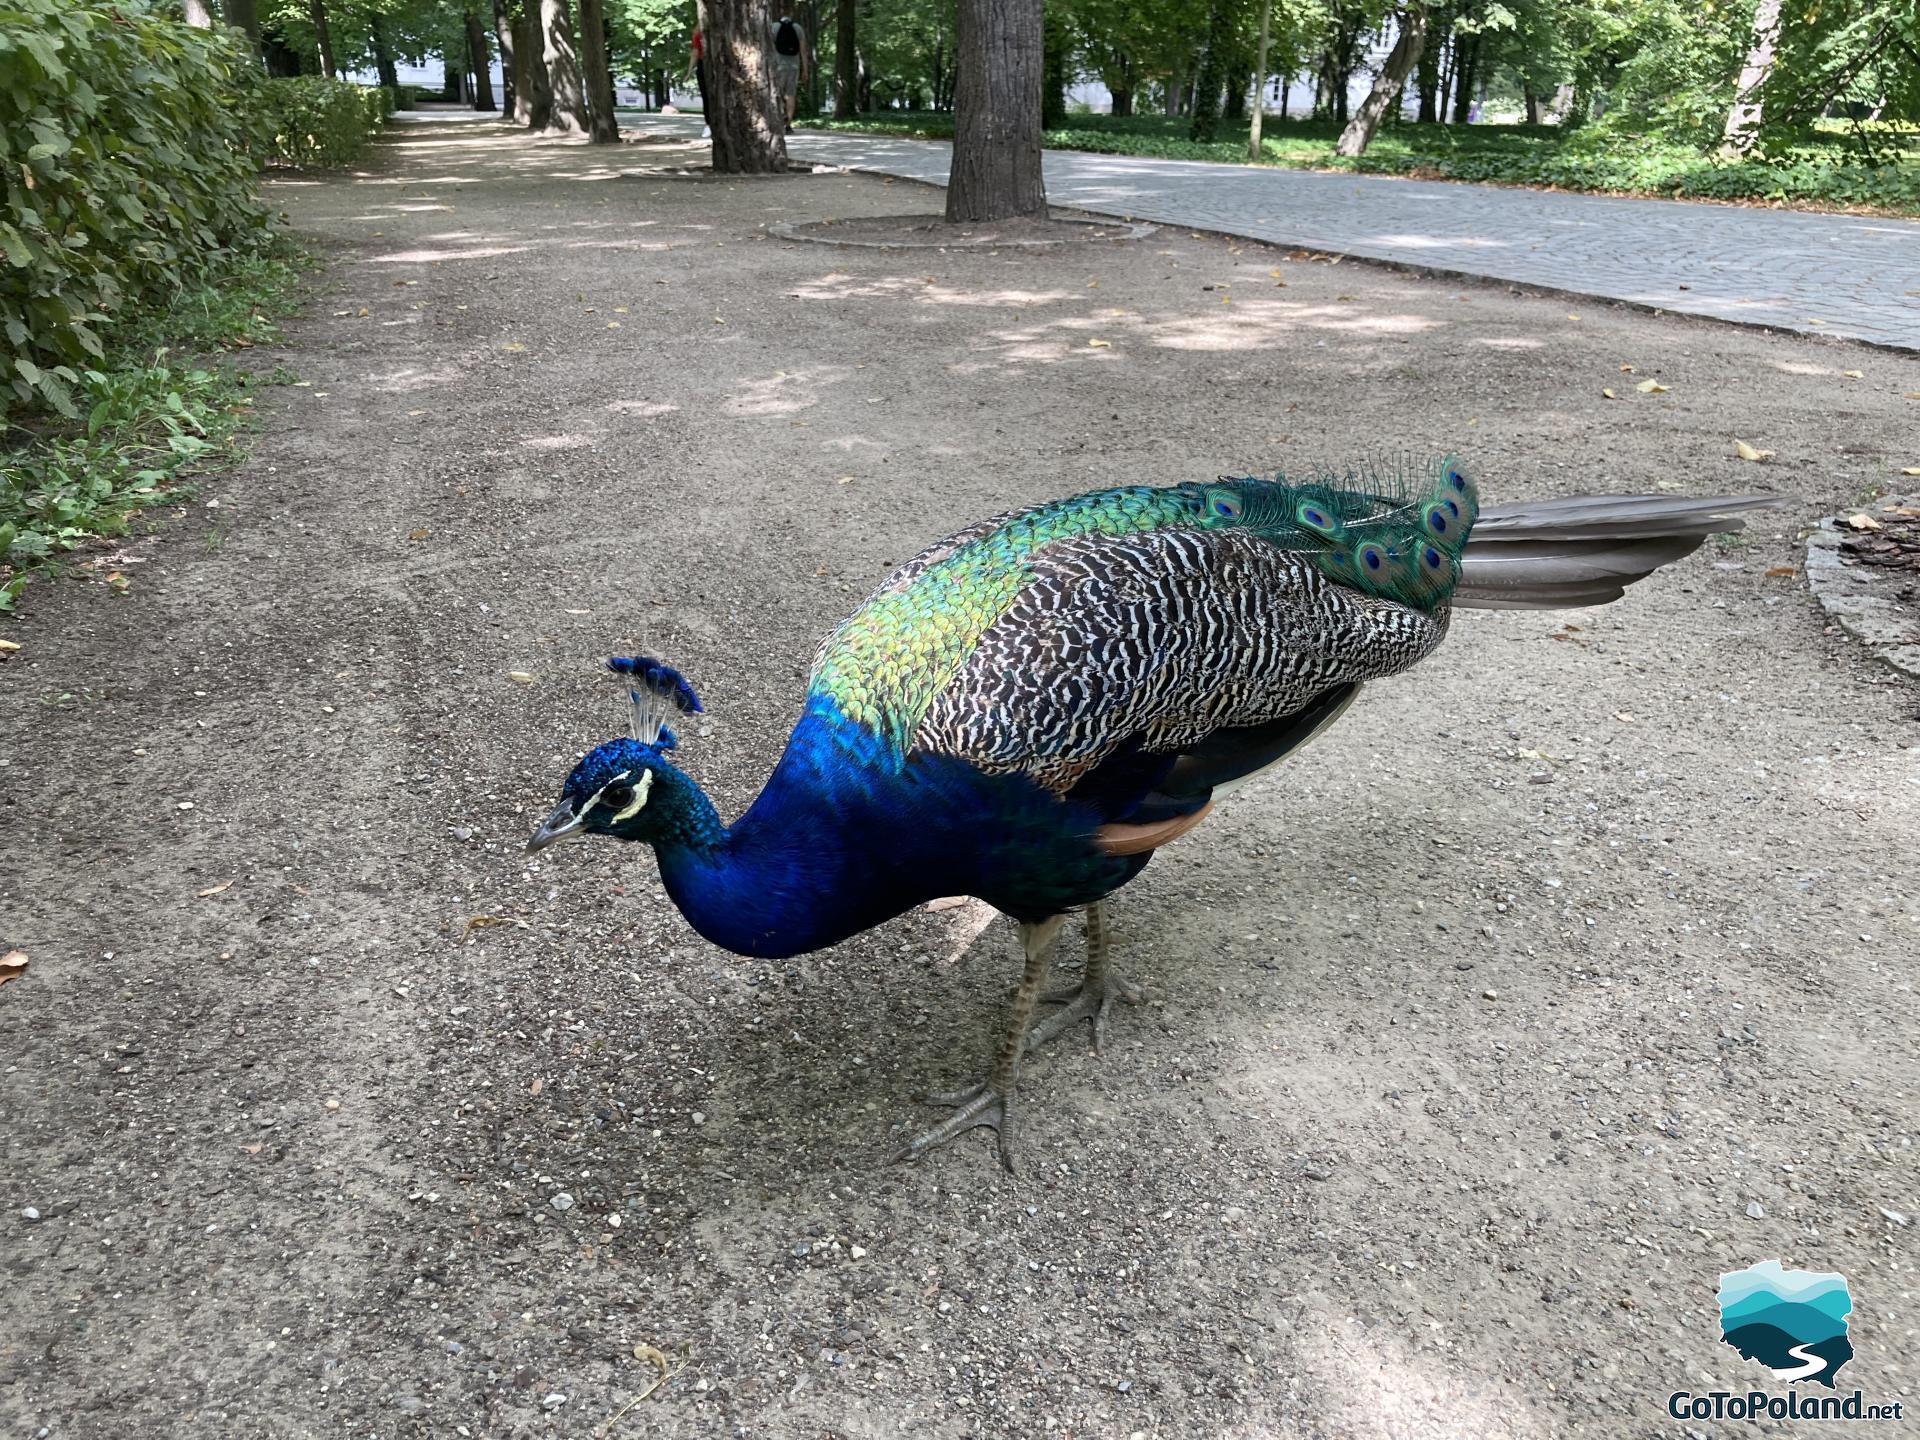 a peacock closer up